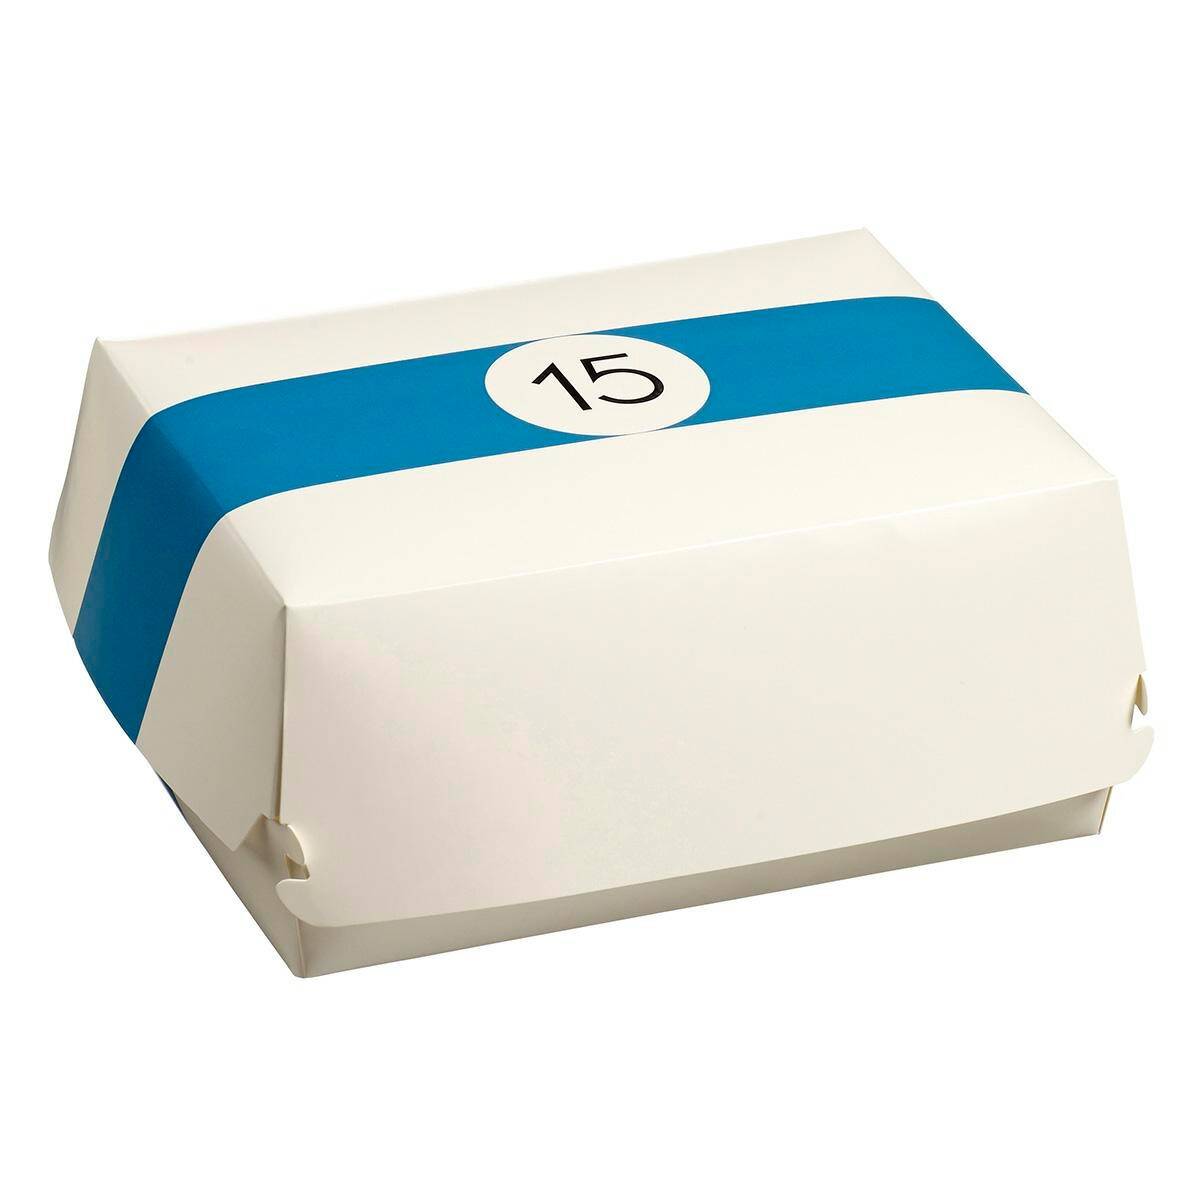 BILLARD pudełko lunch box 225x180x90mm